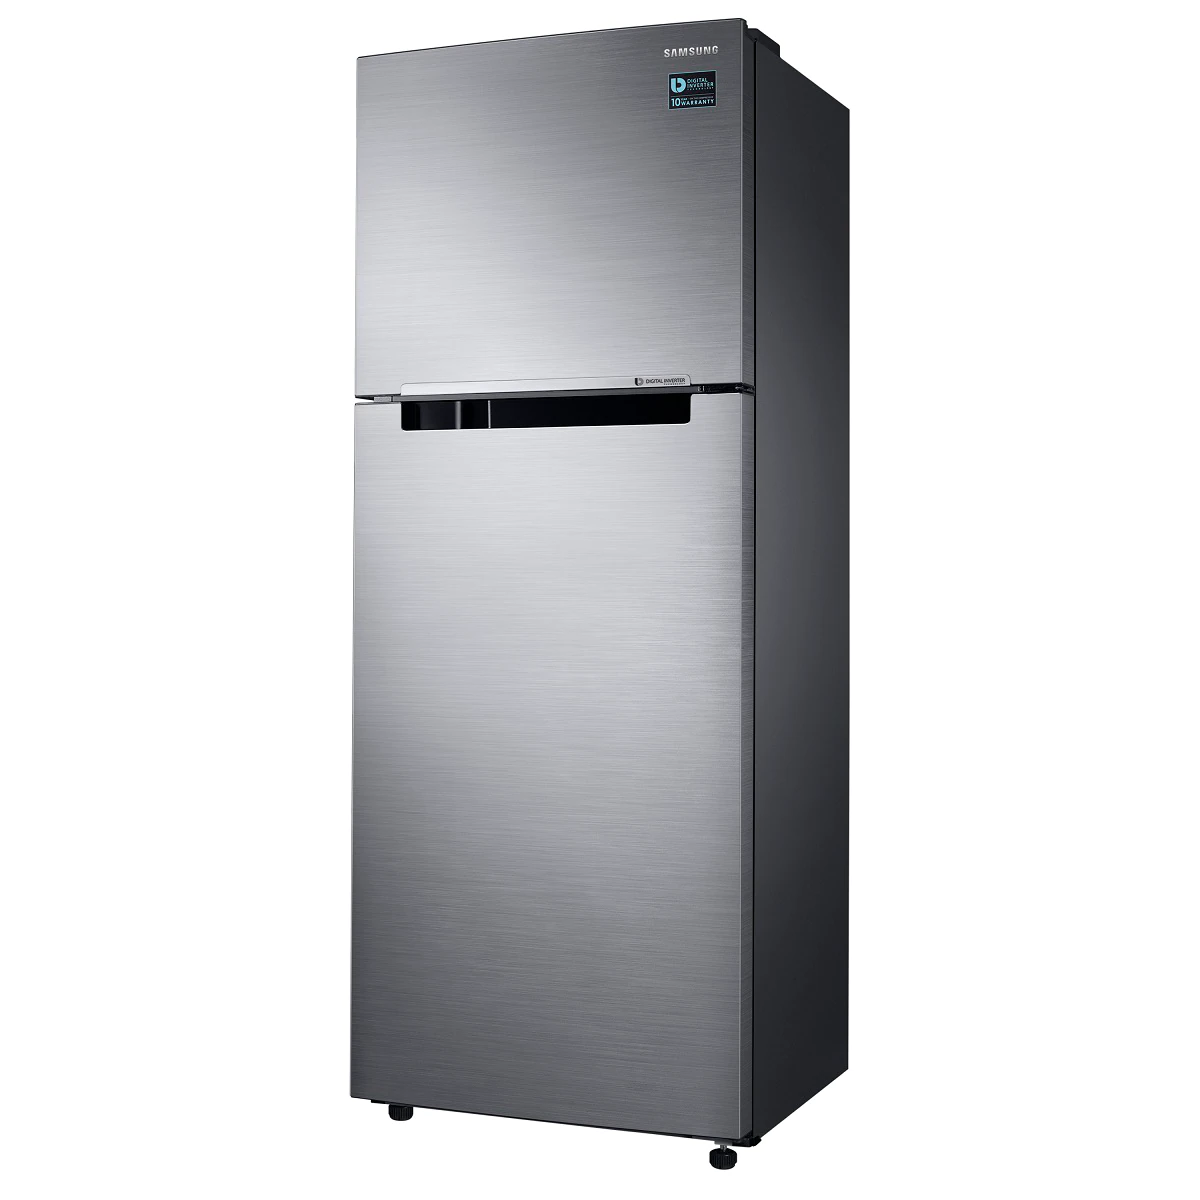 SAMSUNG RT32K5035S9 321L Freestanding 2 doors fridge